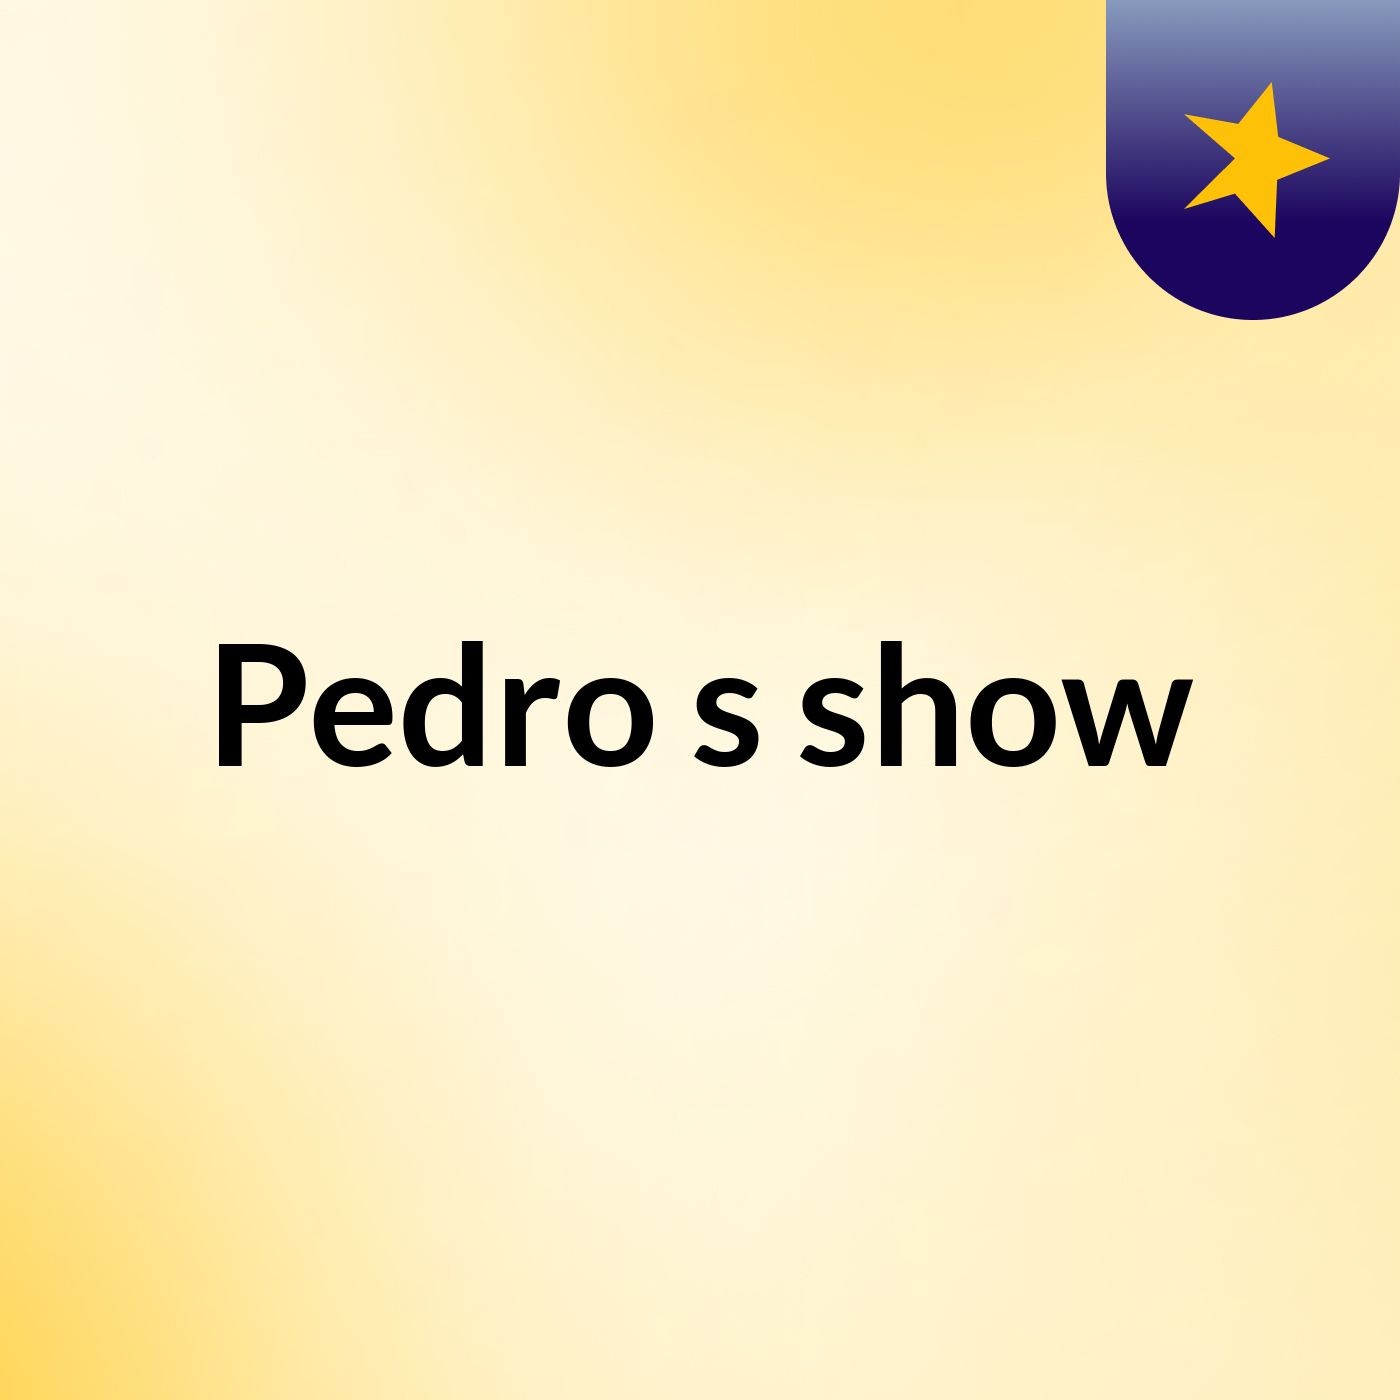 Pedro's show